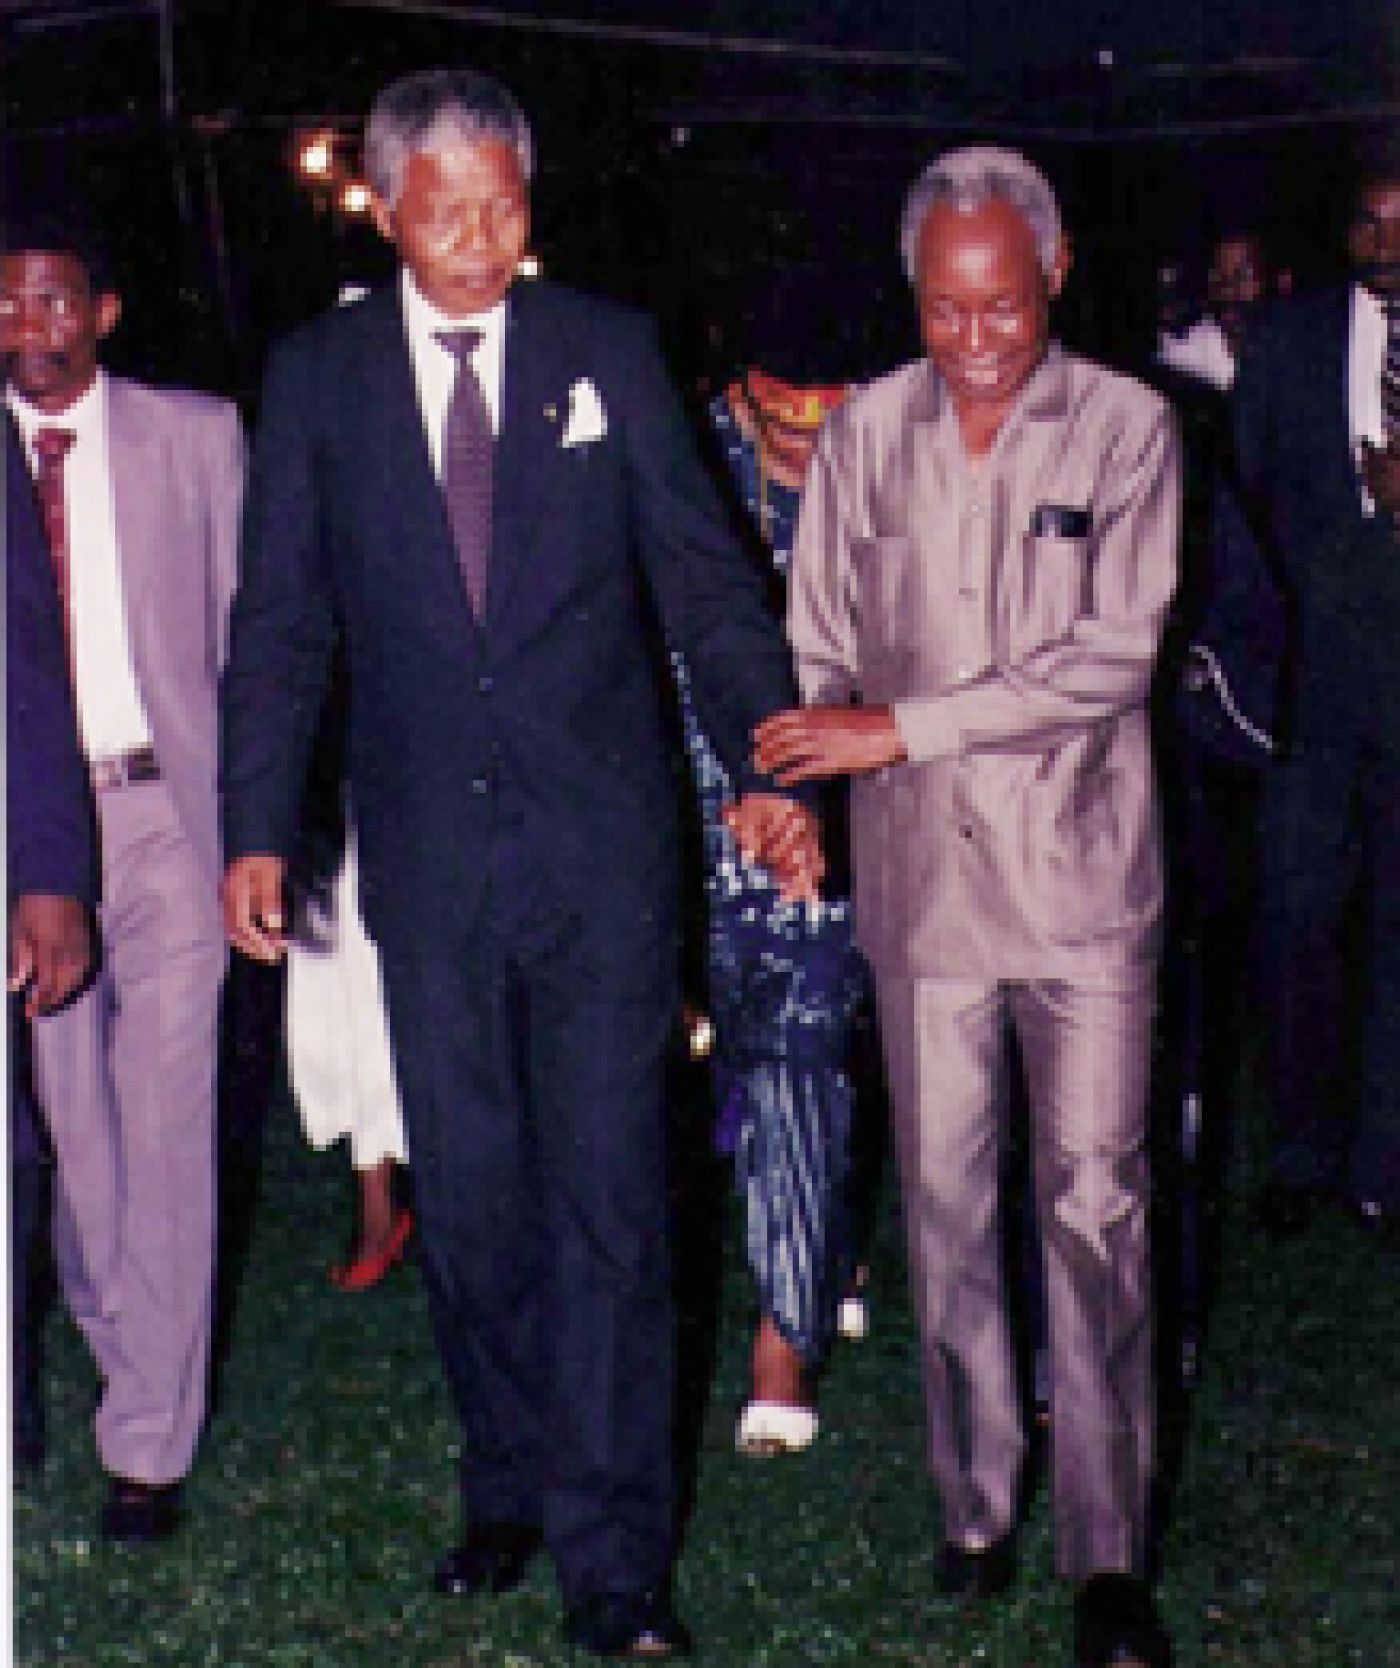 Nelson Mandela and Julius Nyerere walk together